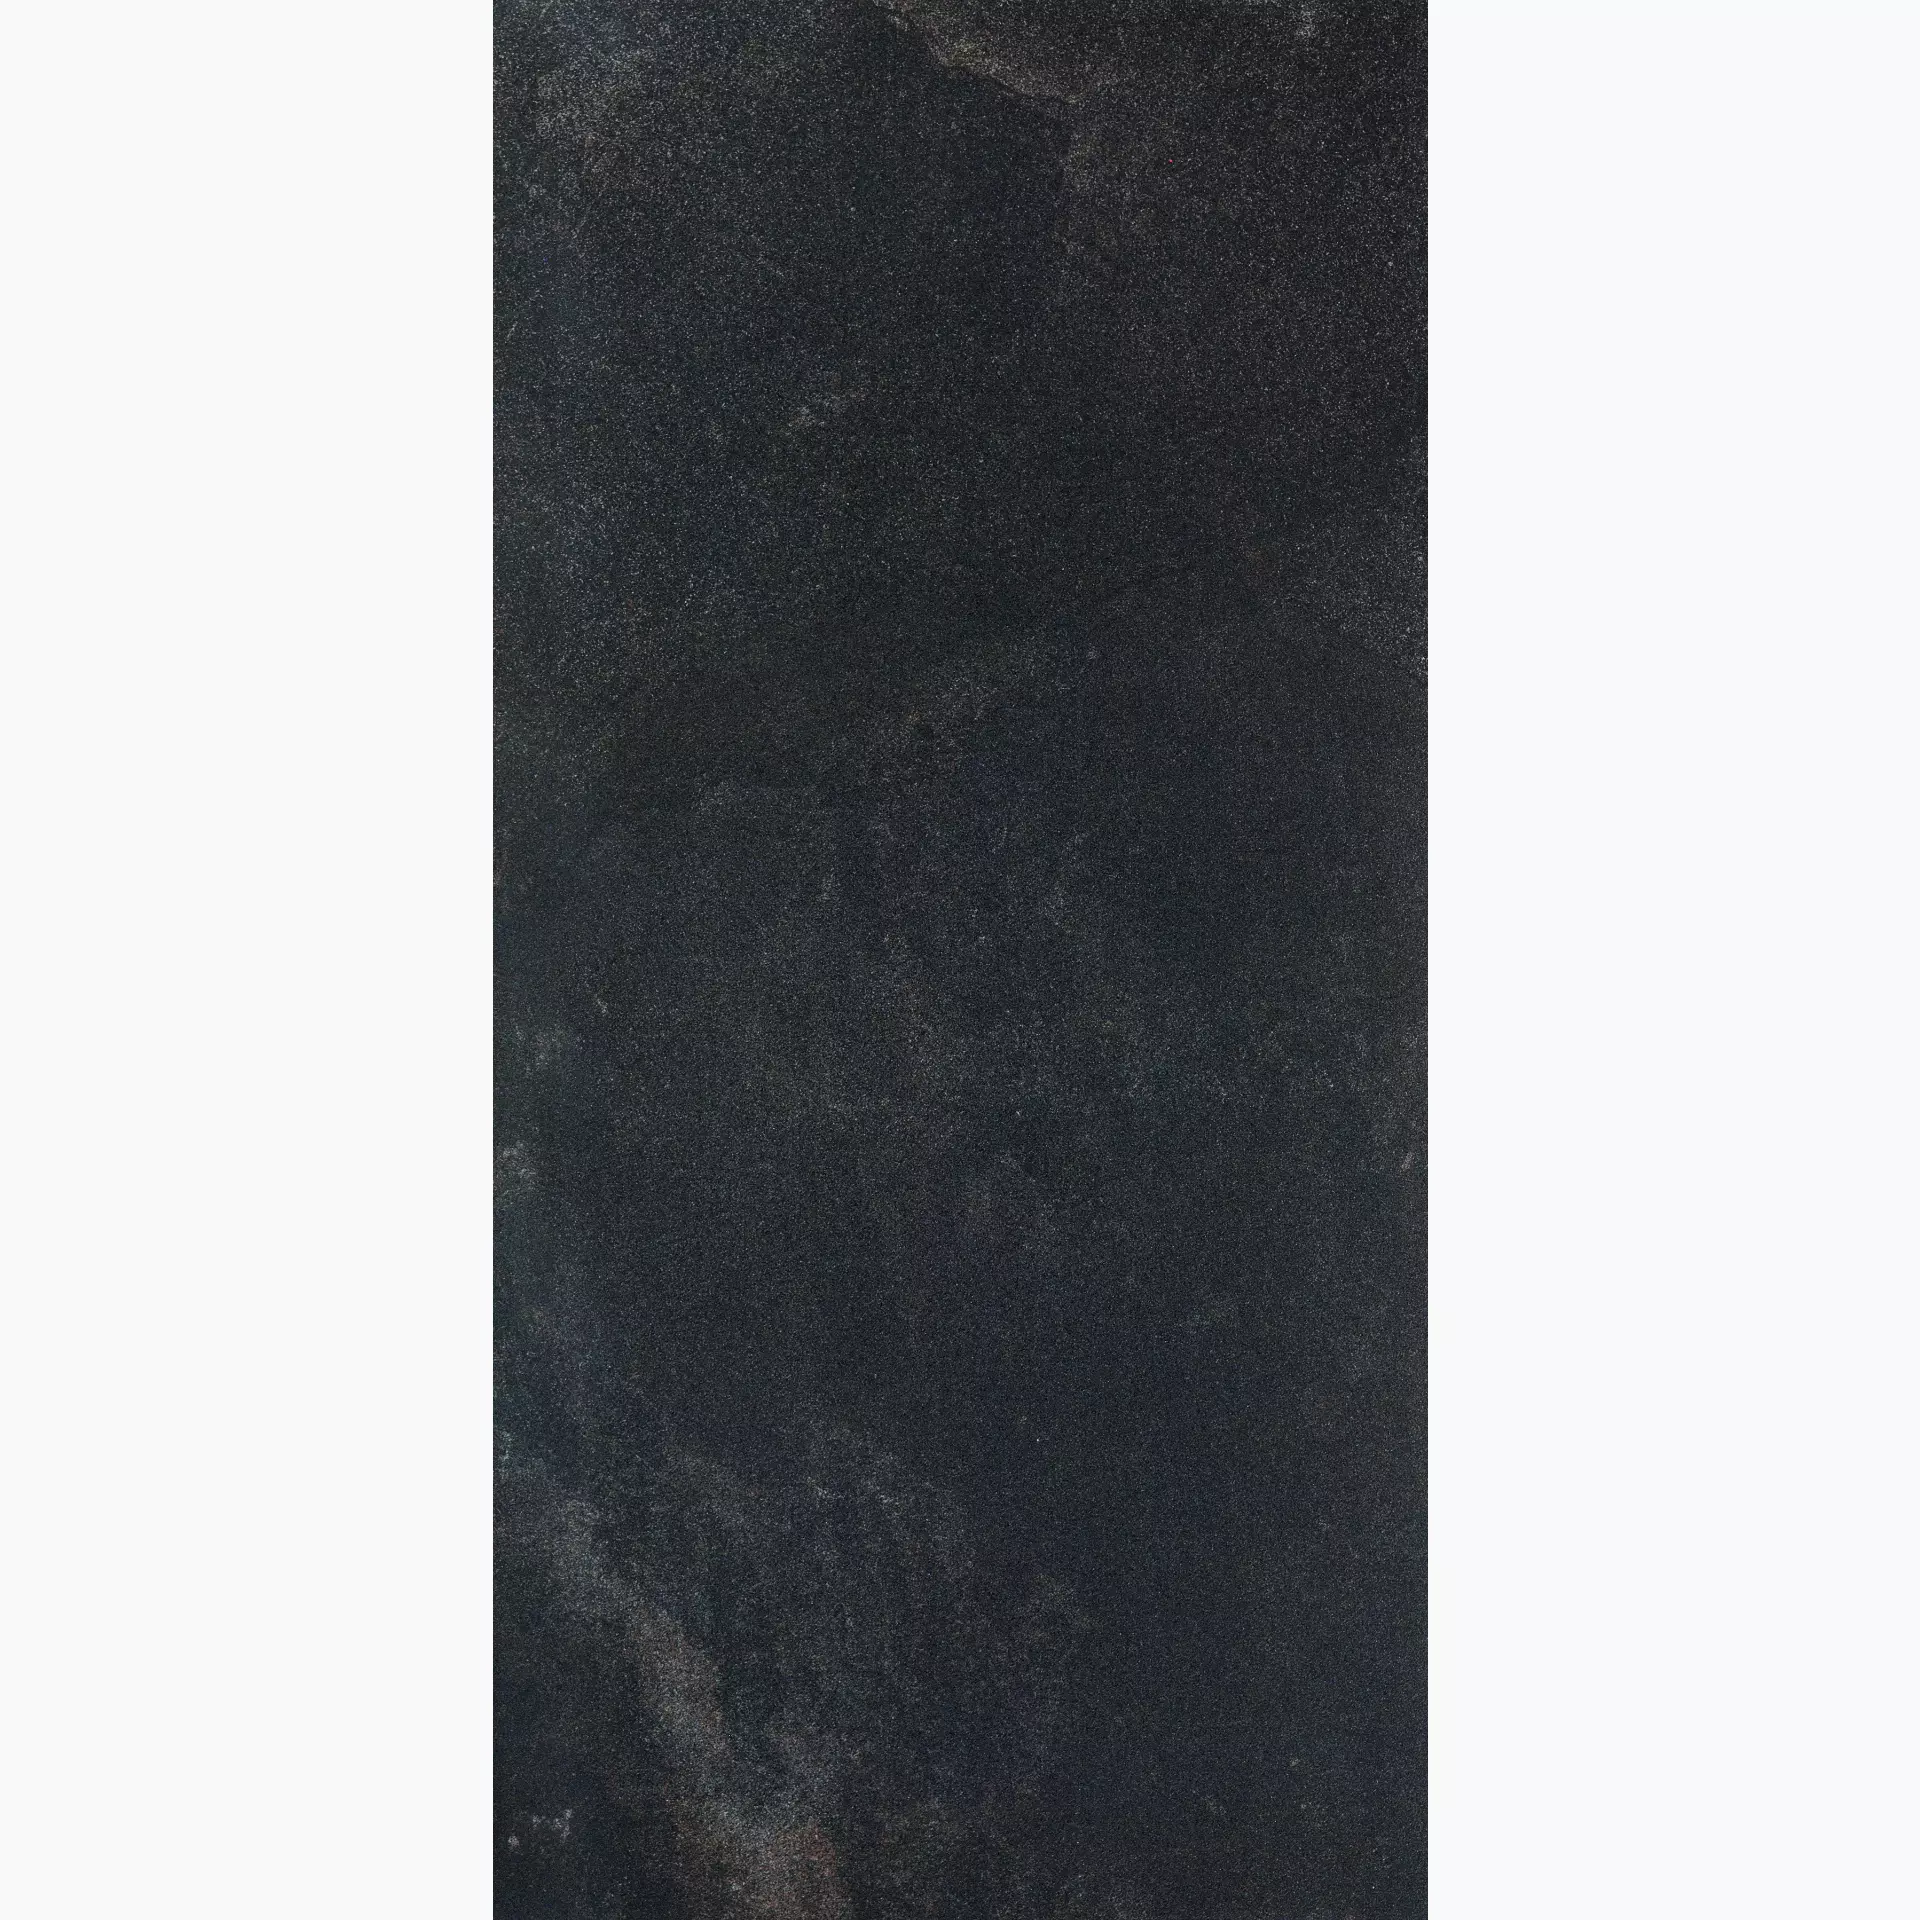 Ergon Stone Project Black Naturale Controfalda Black E6L1 natur 60x120cm rektifiziert 9,5mm